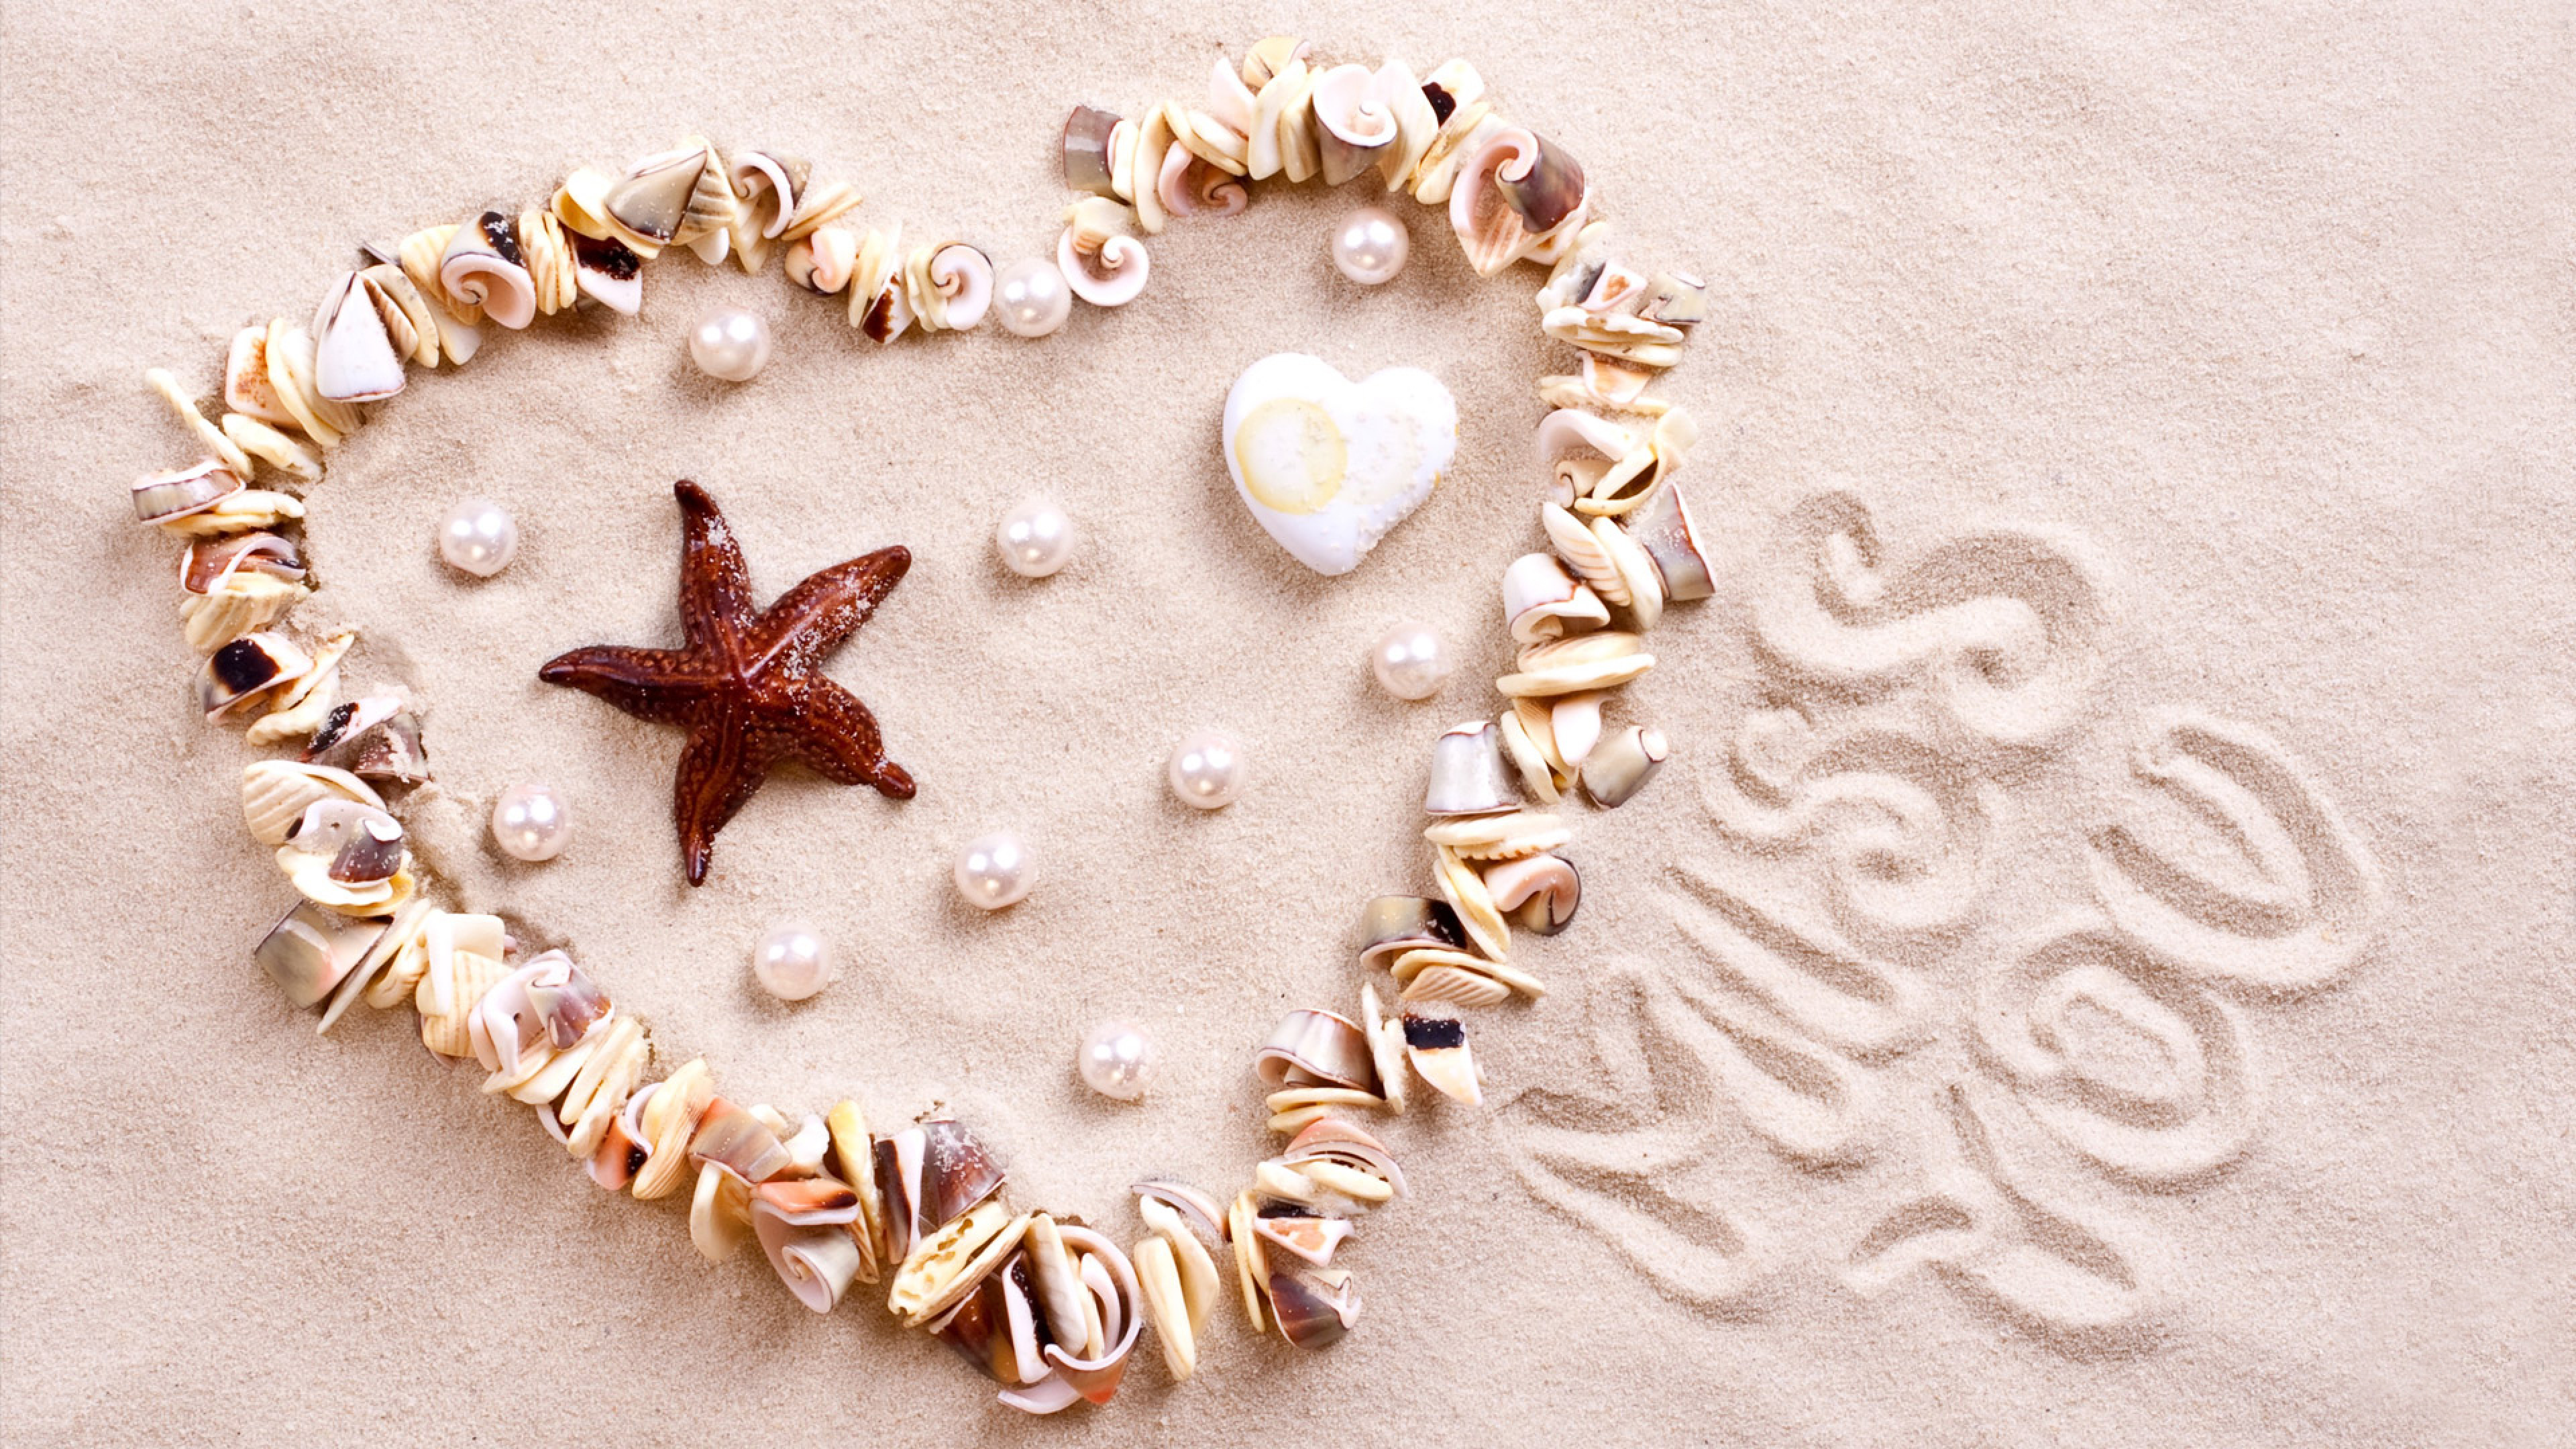 Слово перламутровые. Сердечко на песке. Сердце из ракушек. Ракушки морские на песке. Сердце из ракушек на песке.